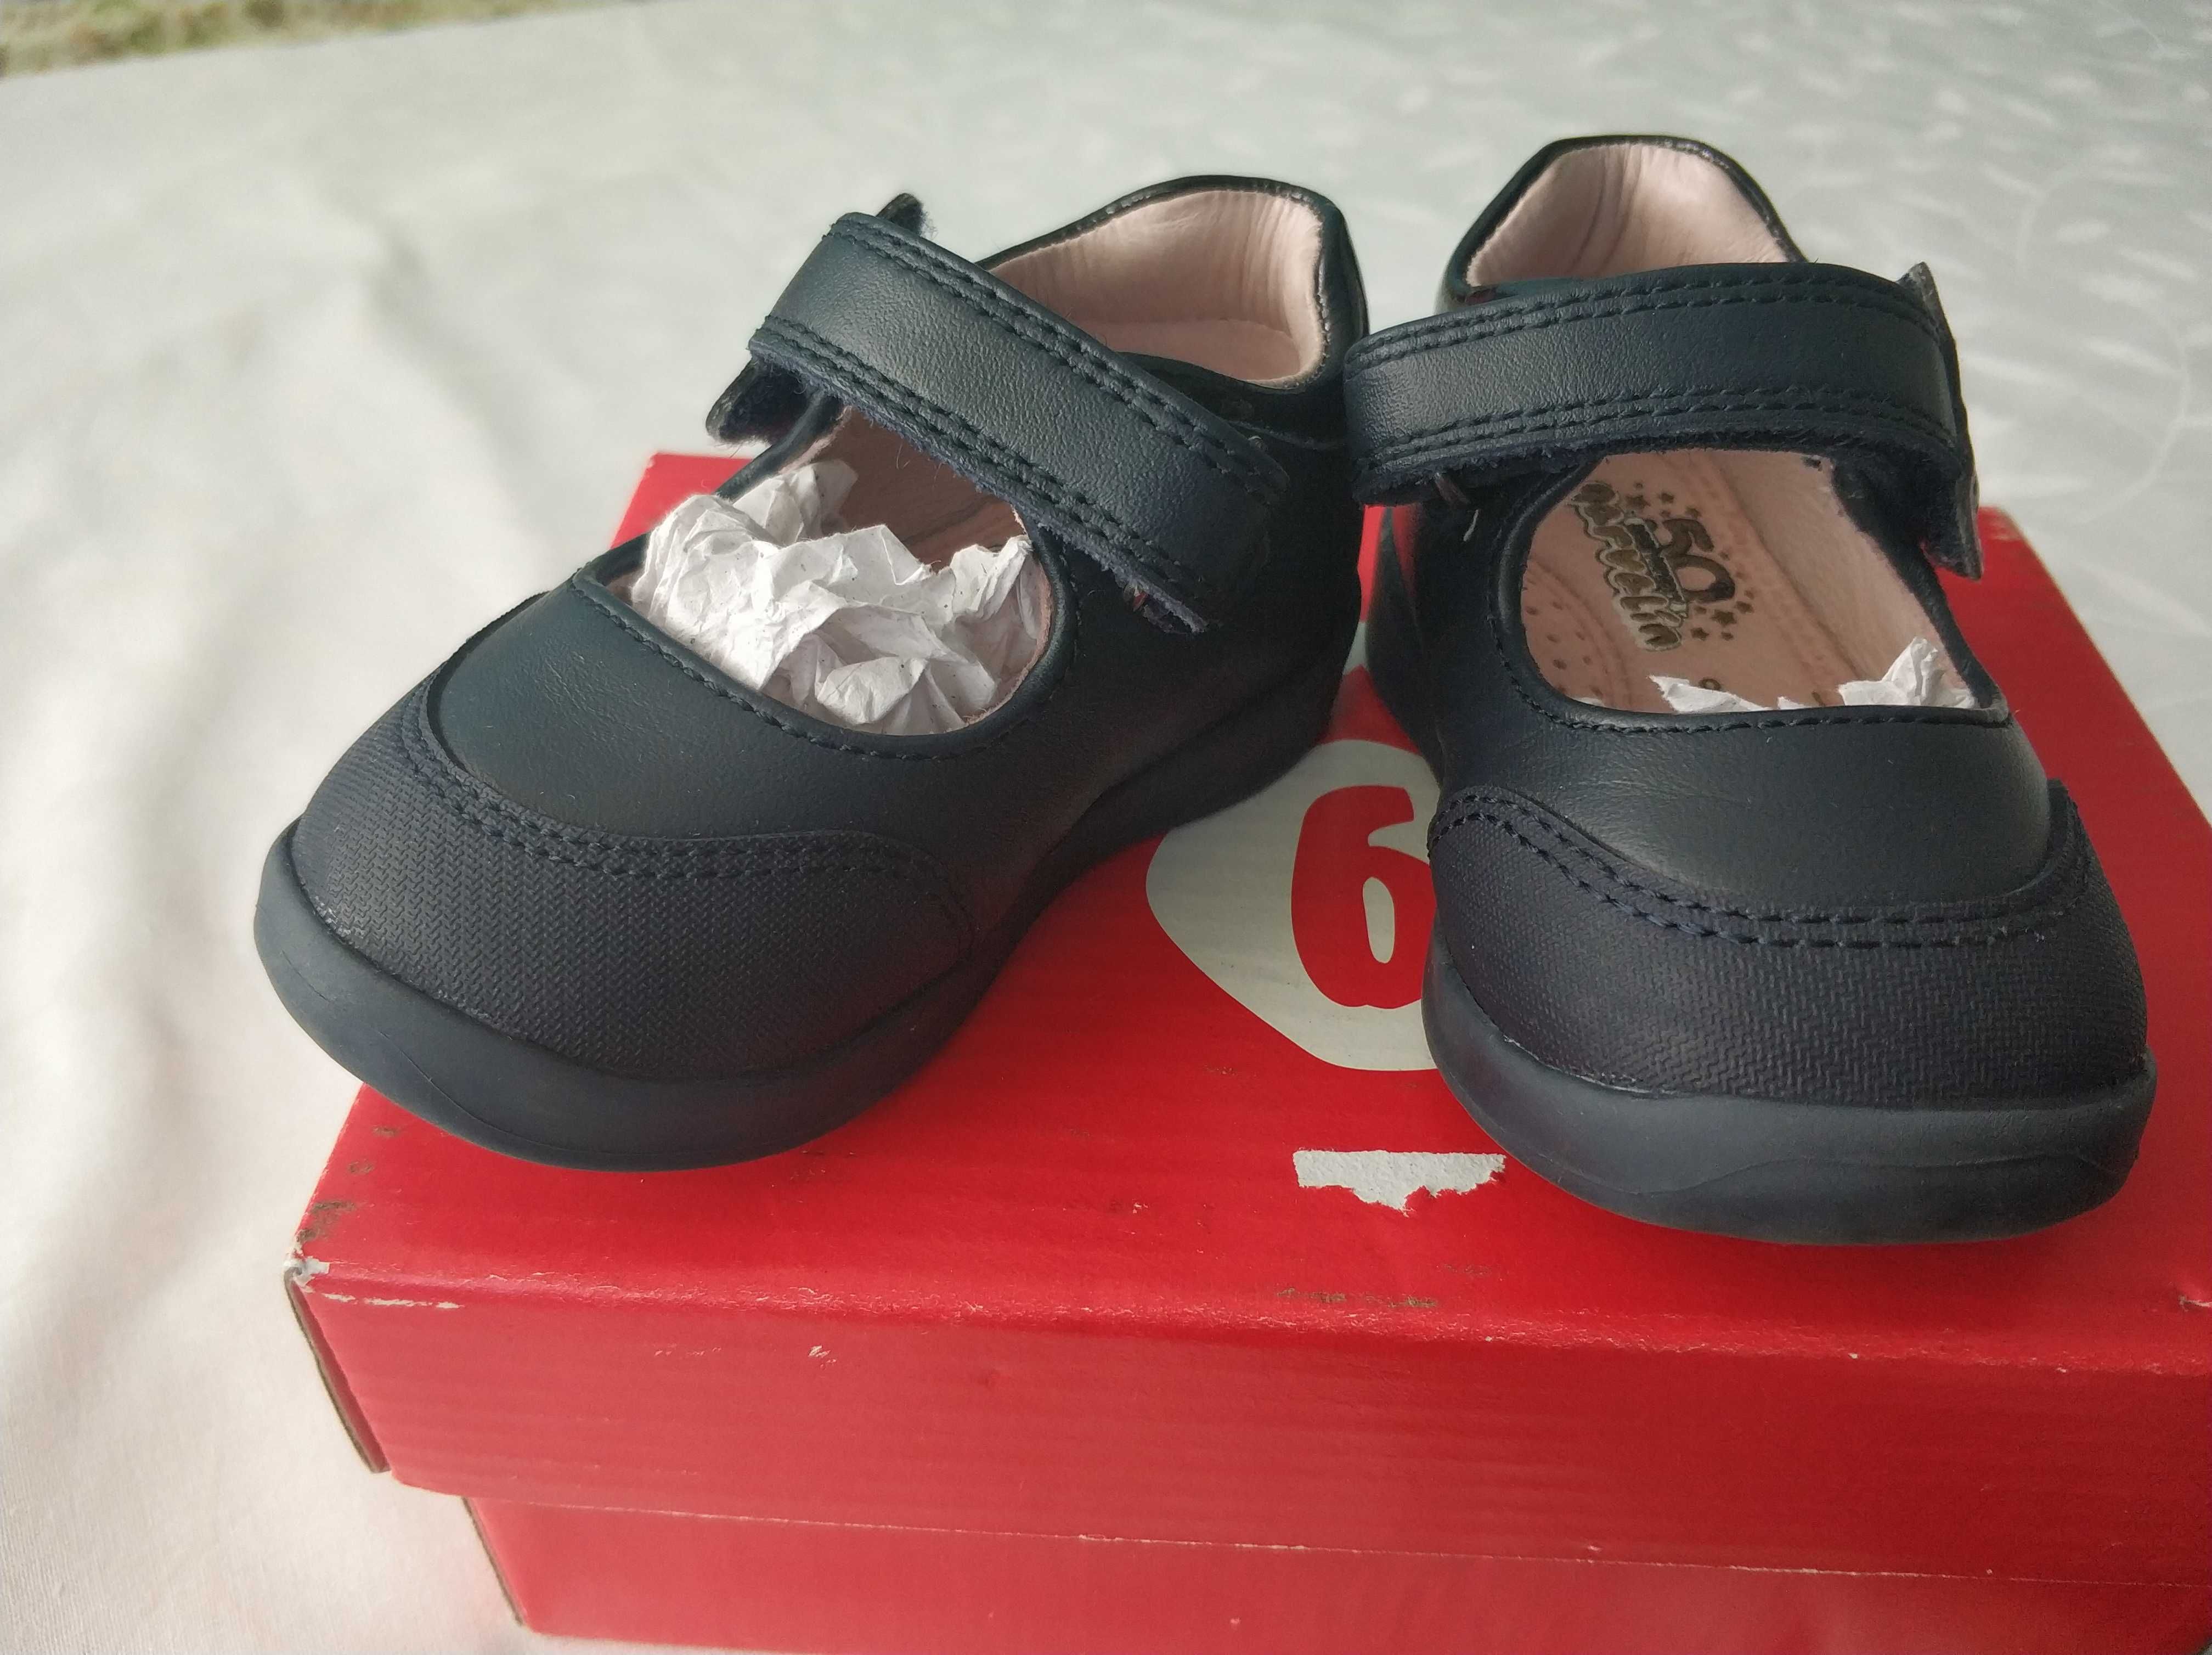 Бебешки обувки (сандали) за момиче, 18номер, Garvalin